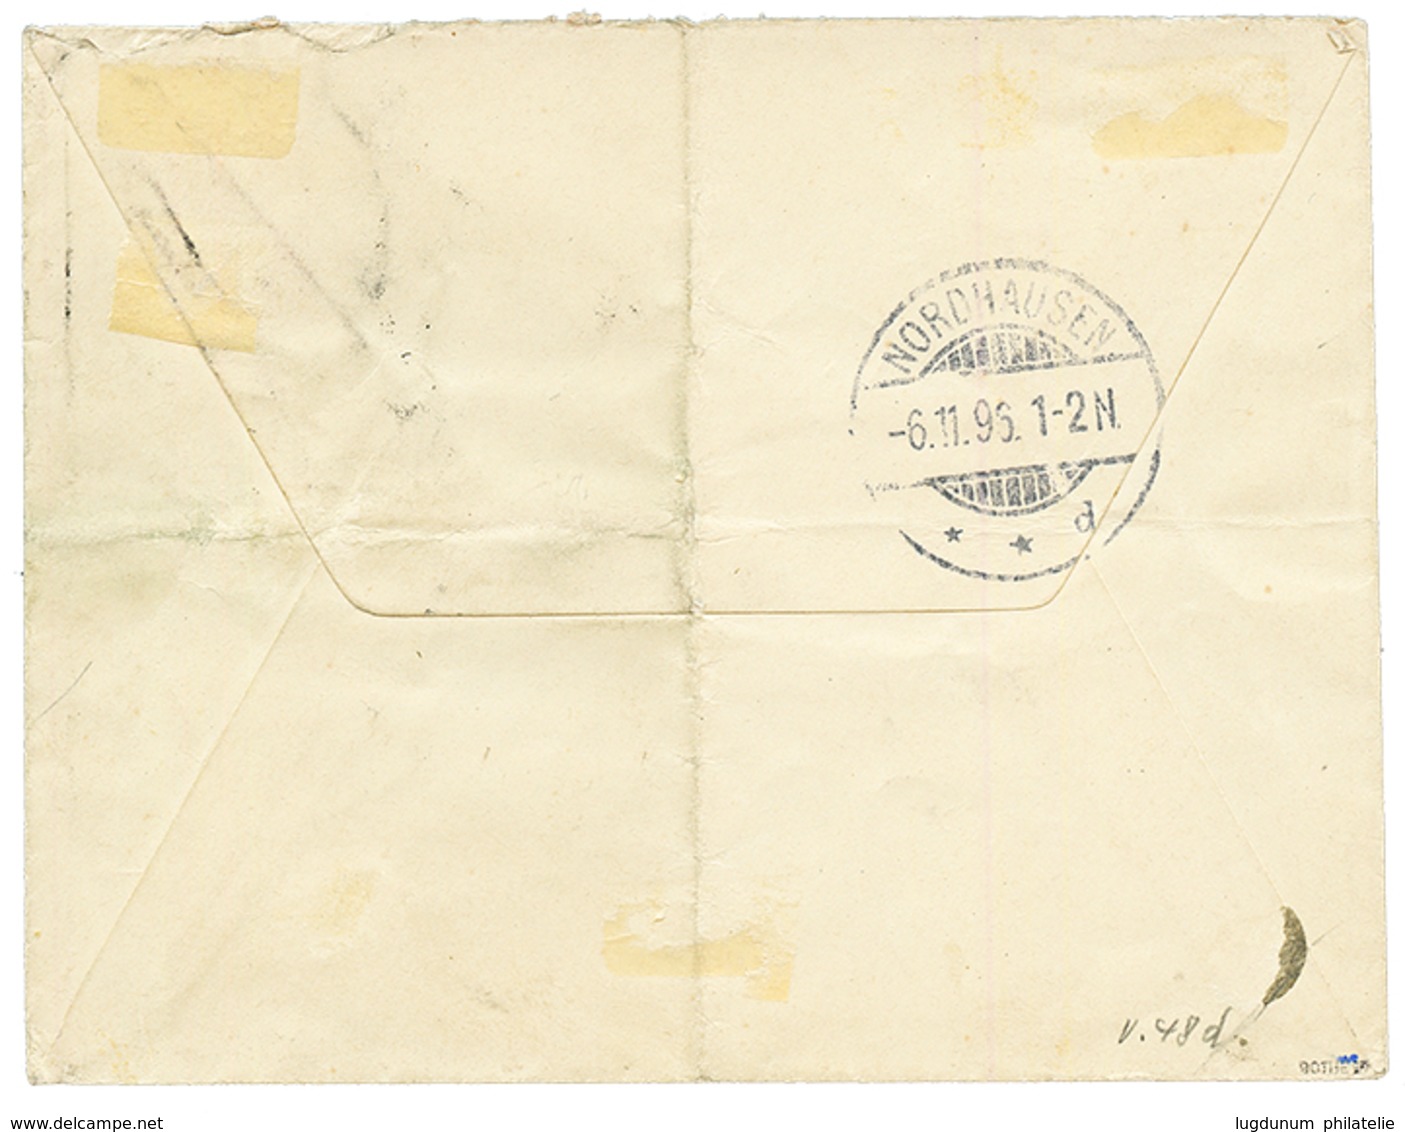 VORLAUFER : 1896 20pf (V48d) Canc. APIA On Envelope To GERMANY. Signed BOTHE. Superb. - Samoa